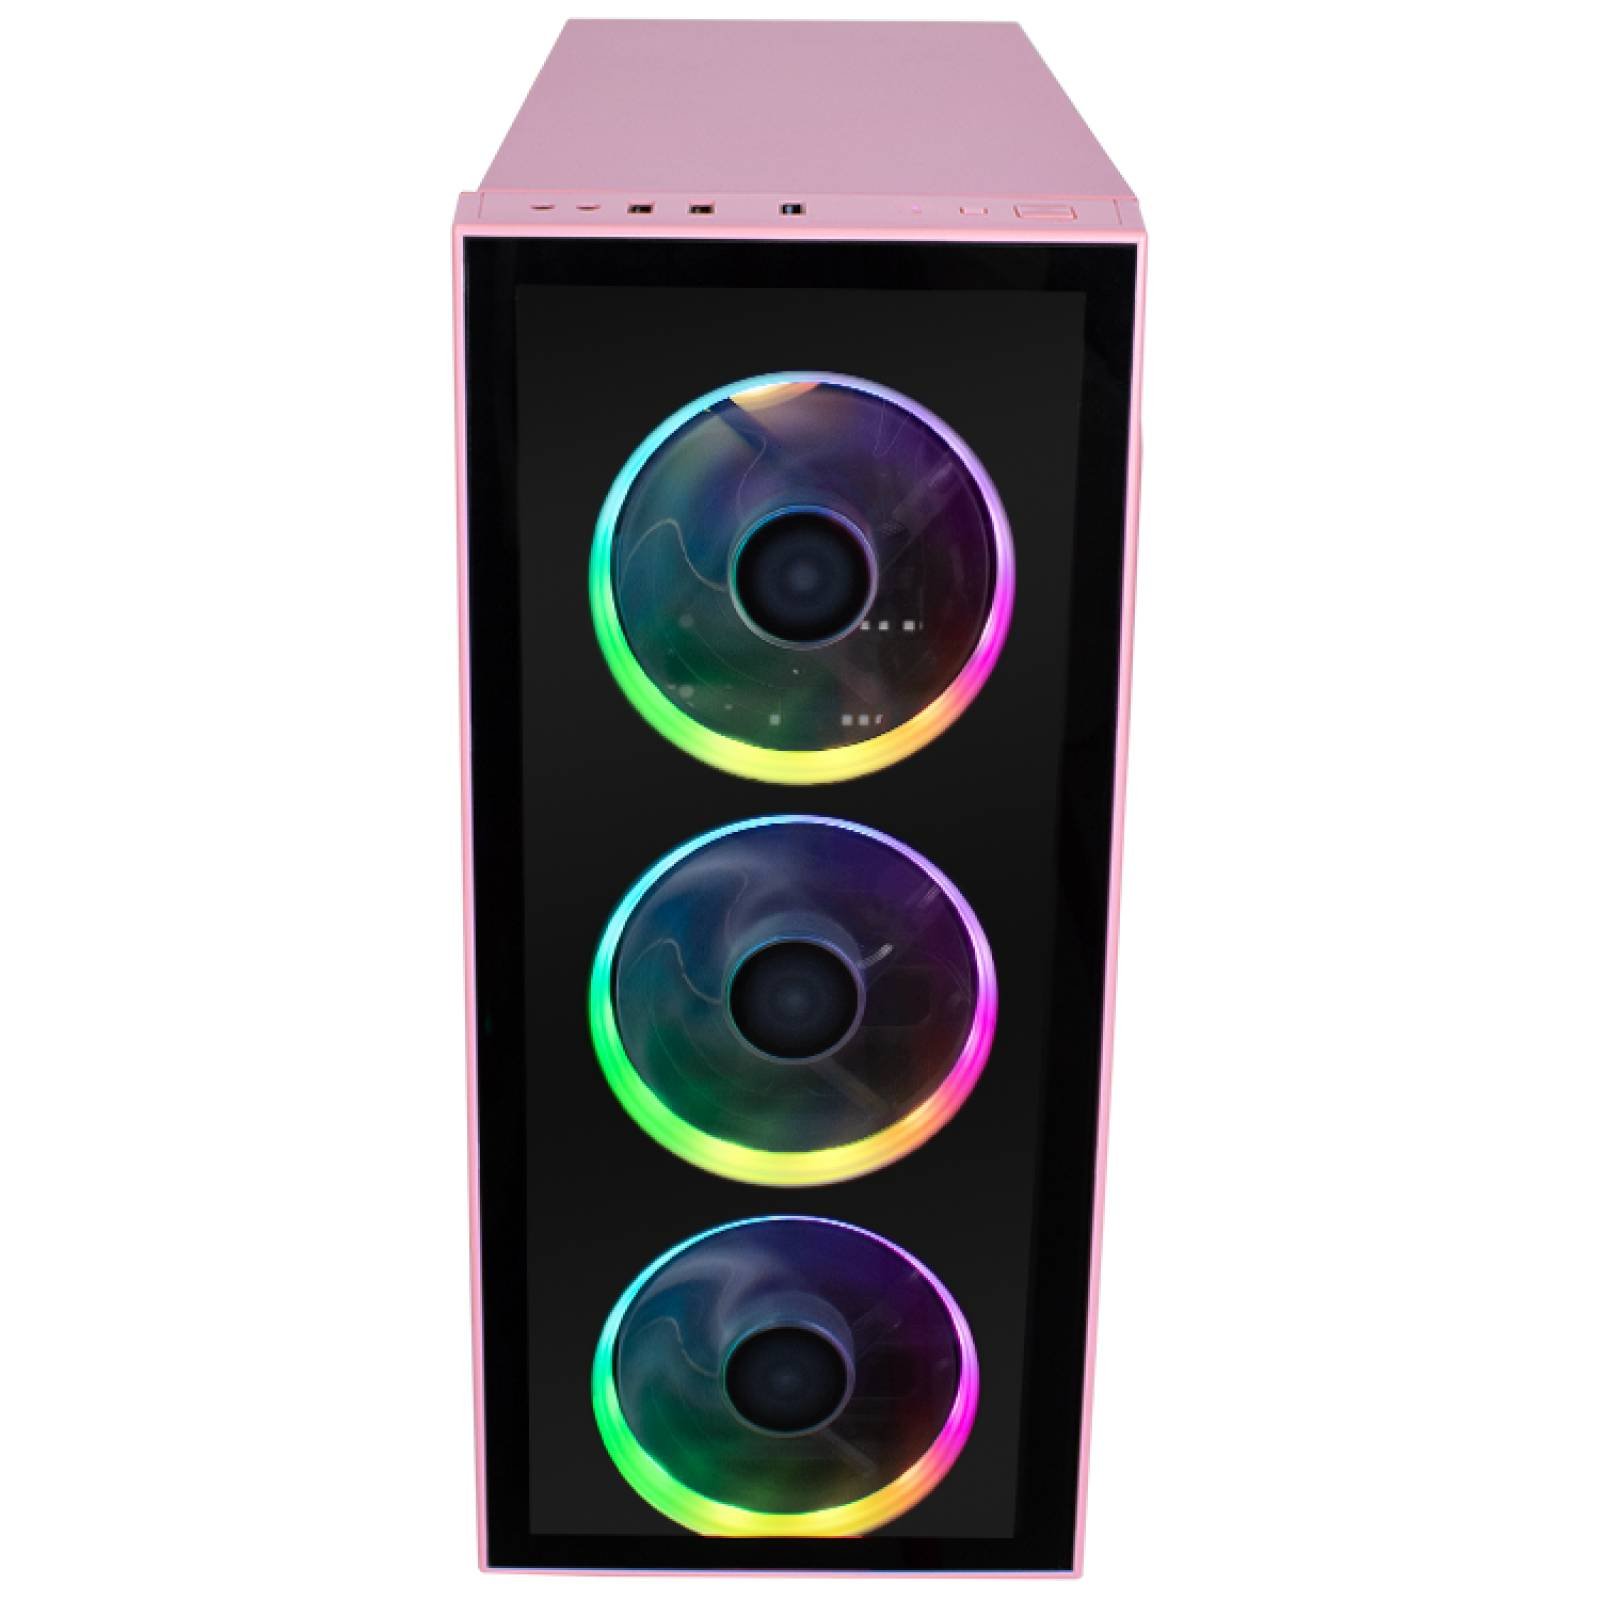 Xtreme PC Gamer Intel Core I7 9700 16GB SSD 240GB 3TB RGB WIFI Pink 